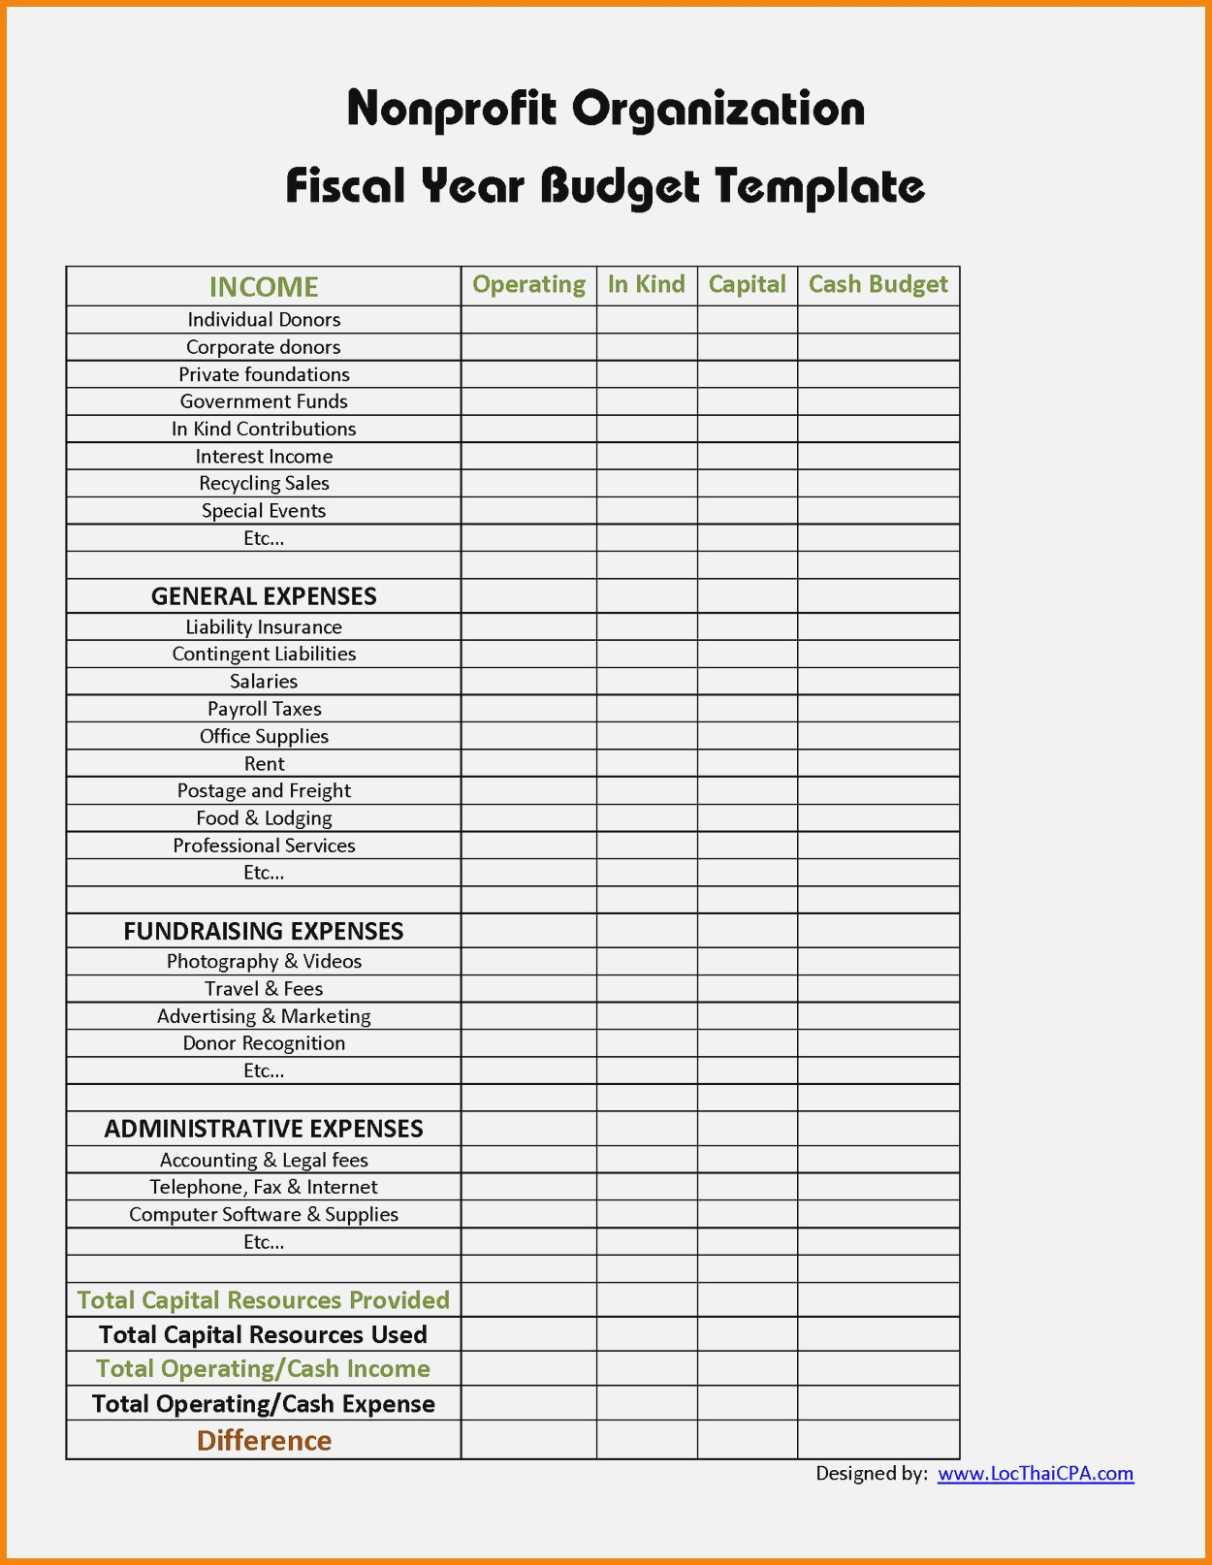 10 Treasurers Report Template | Resume Samples Throughout Fundraising Report Template